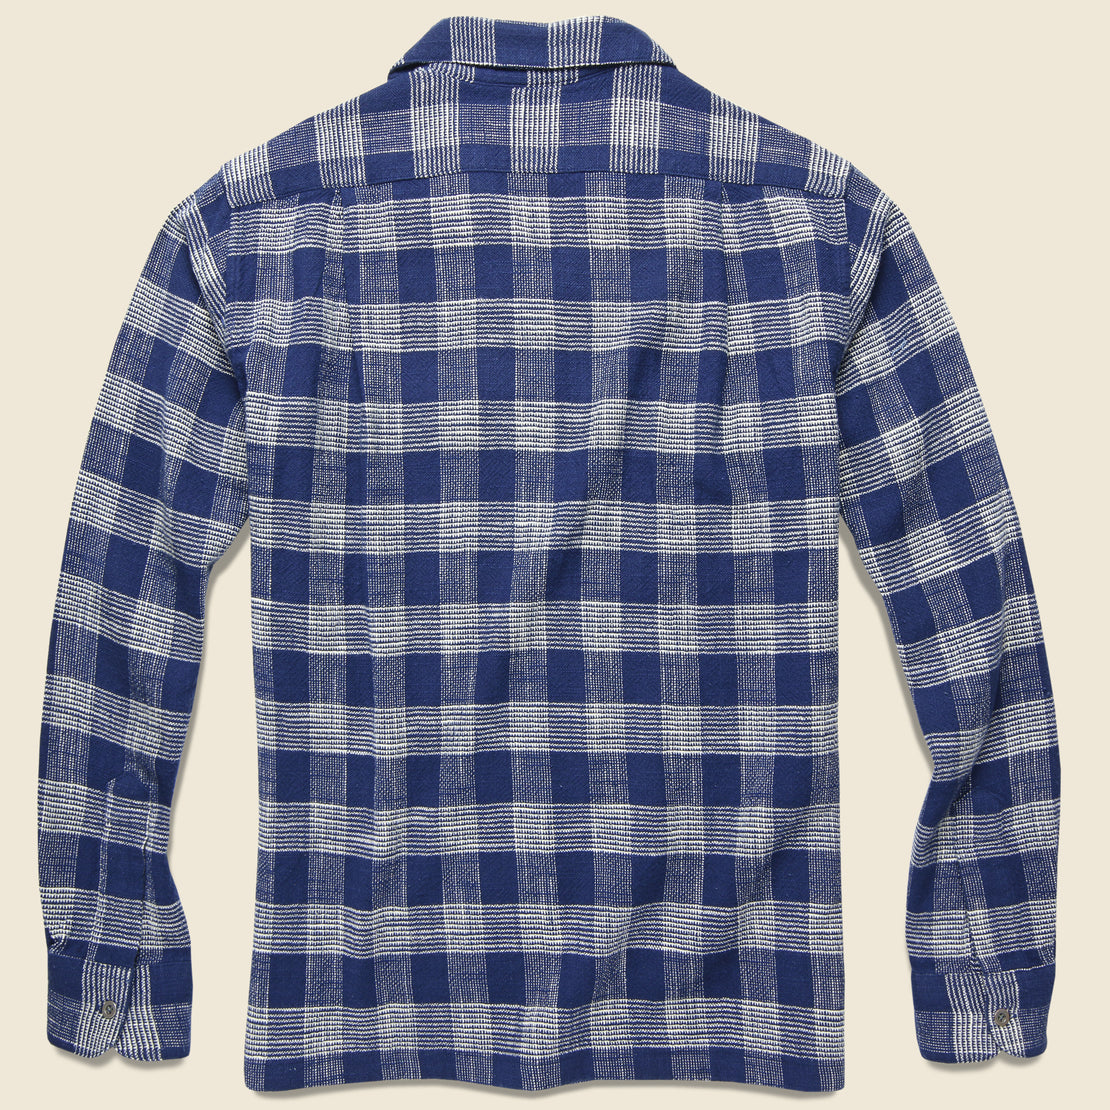 Triple Check Workshirt - Indigo - Corridor - STAG Provisions - Tops - L/S Woven - Overshirt